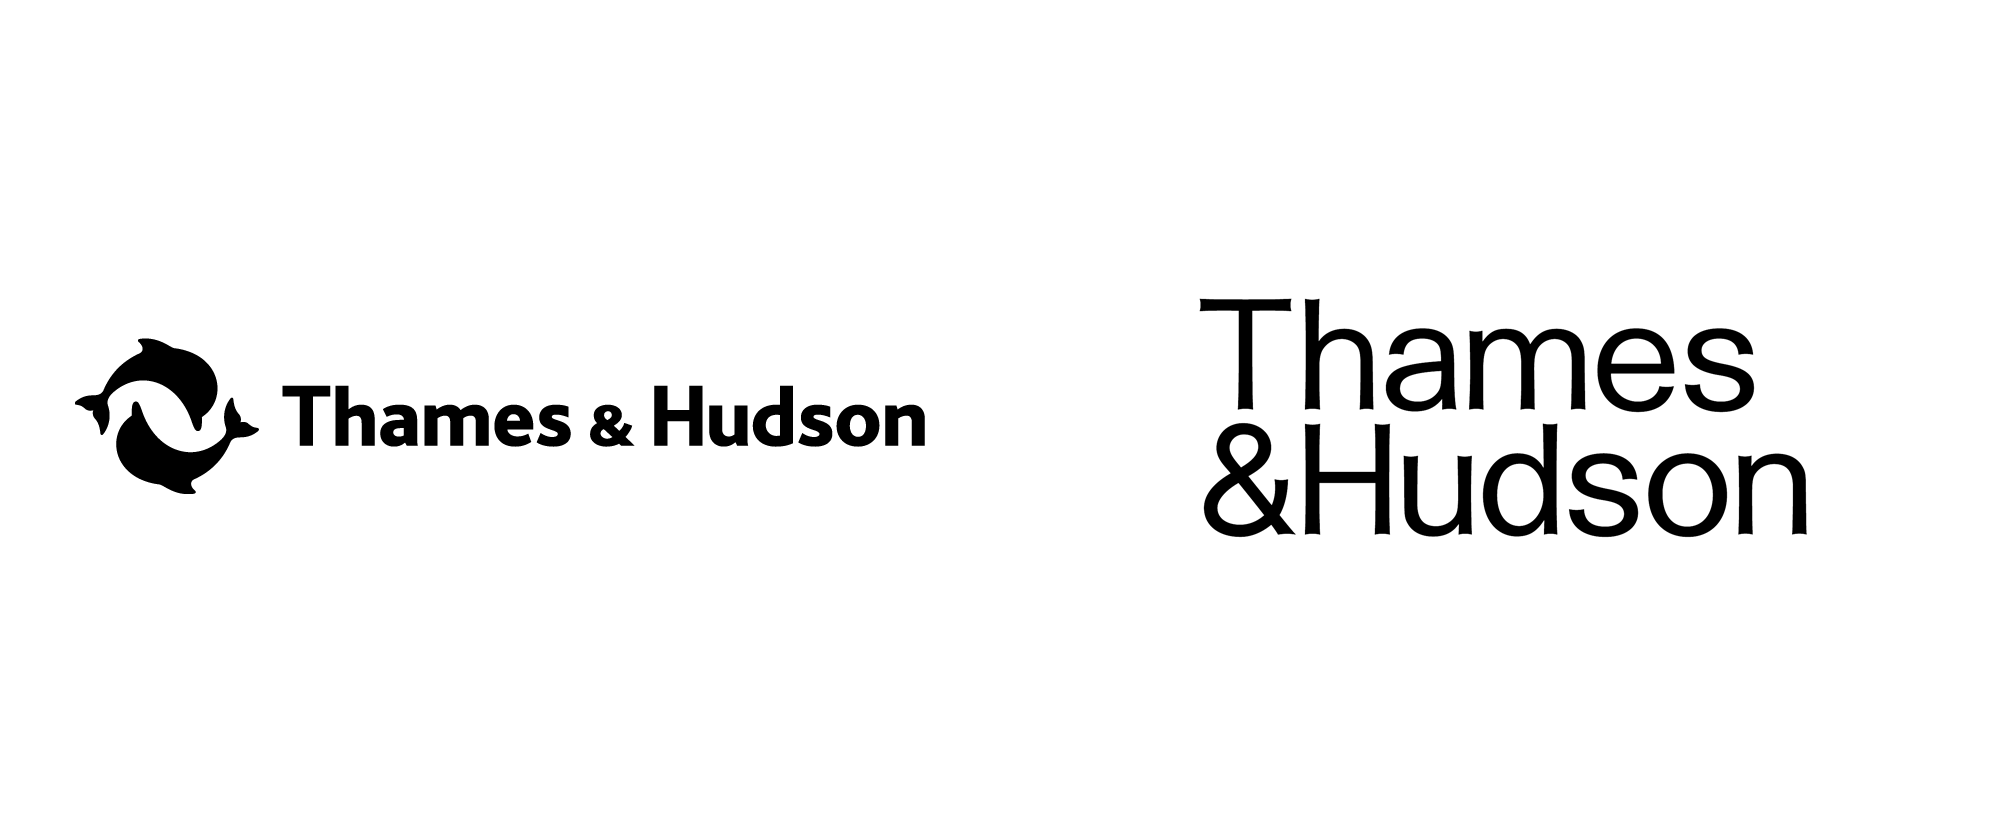 Brand New: New Logo and Identity for Thames & Hudson by Pentagram